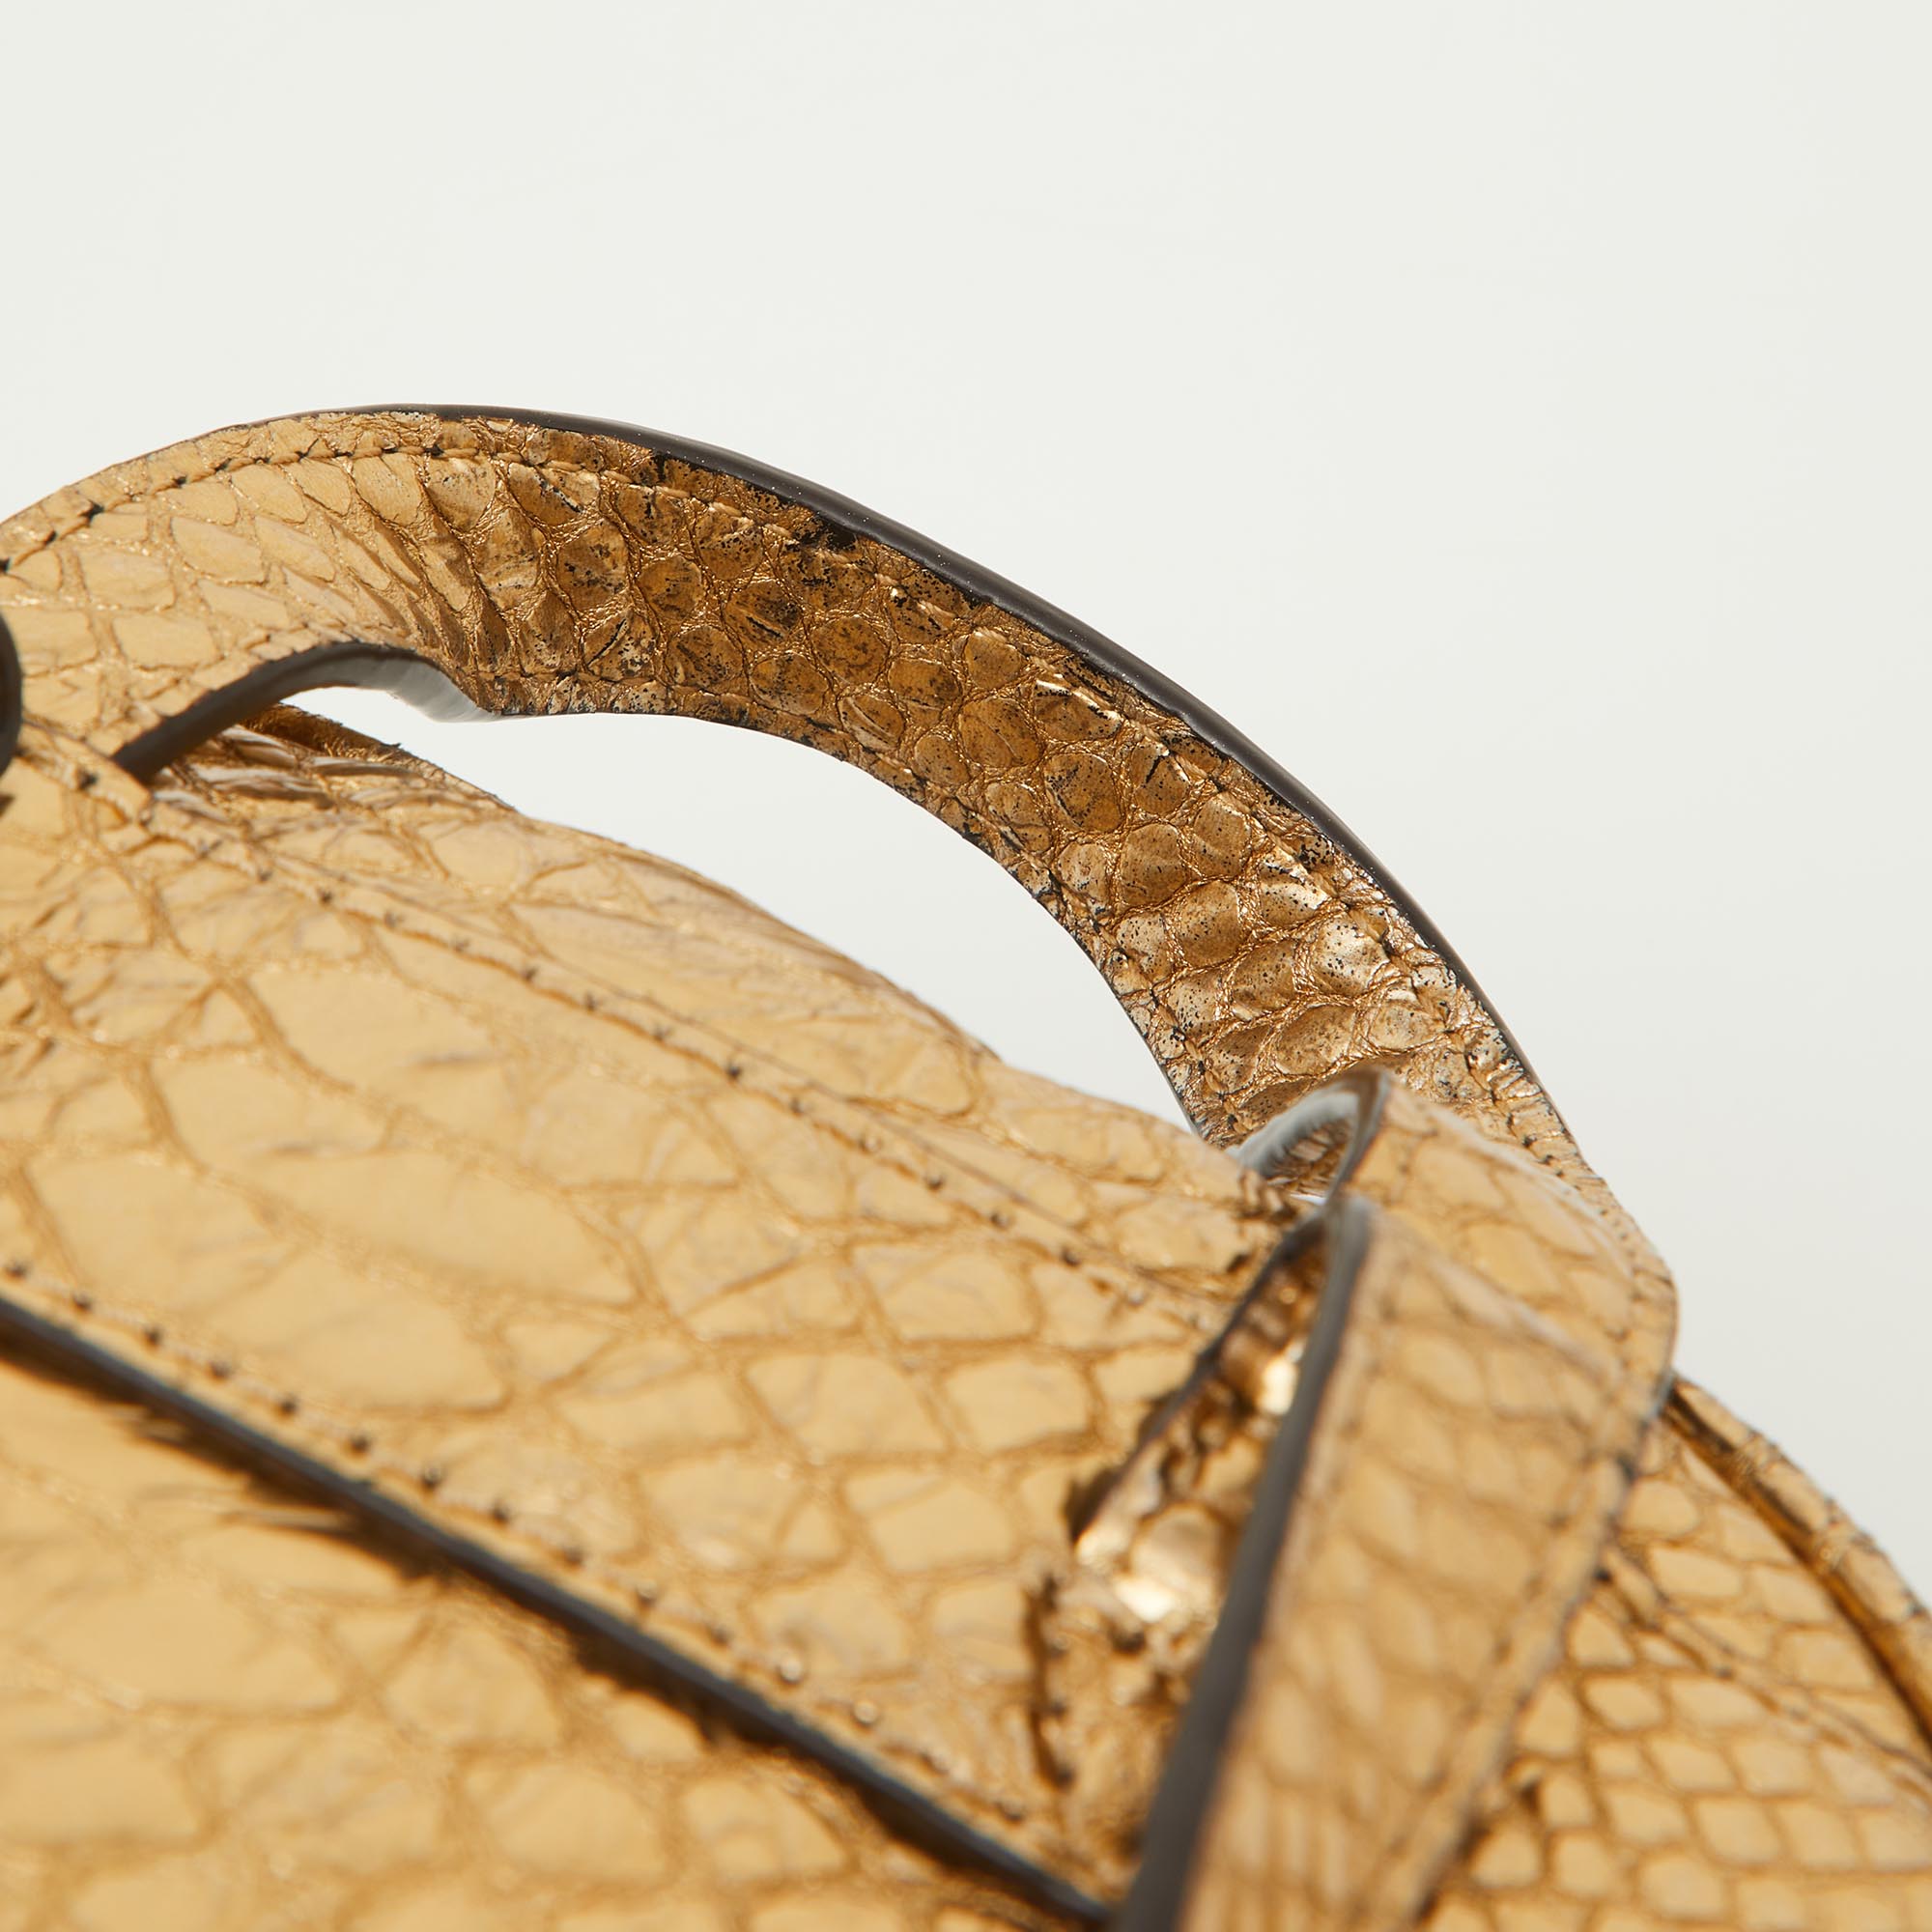 Michael Kors Metallic Gold Python Embossed Leather Small Rhea Backpack